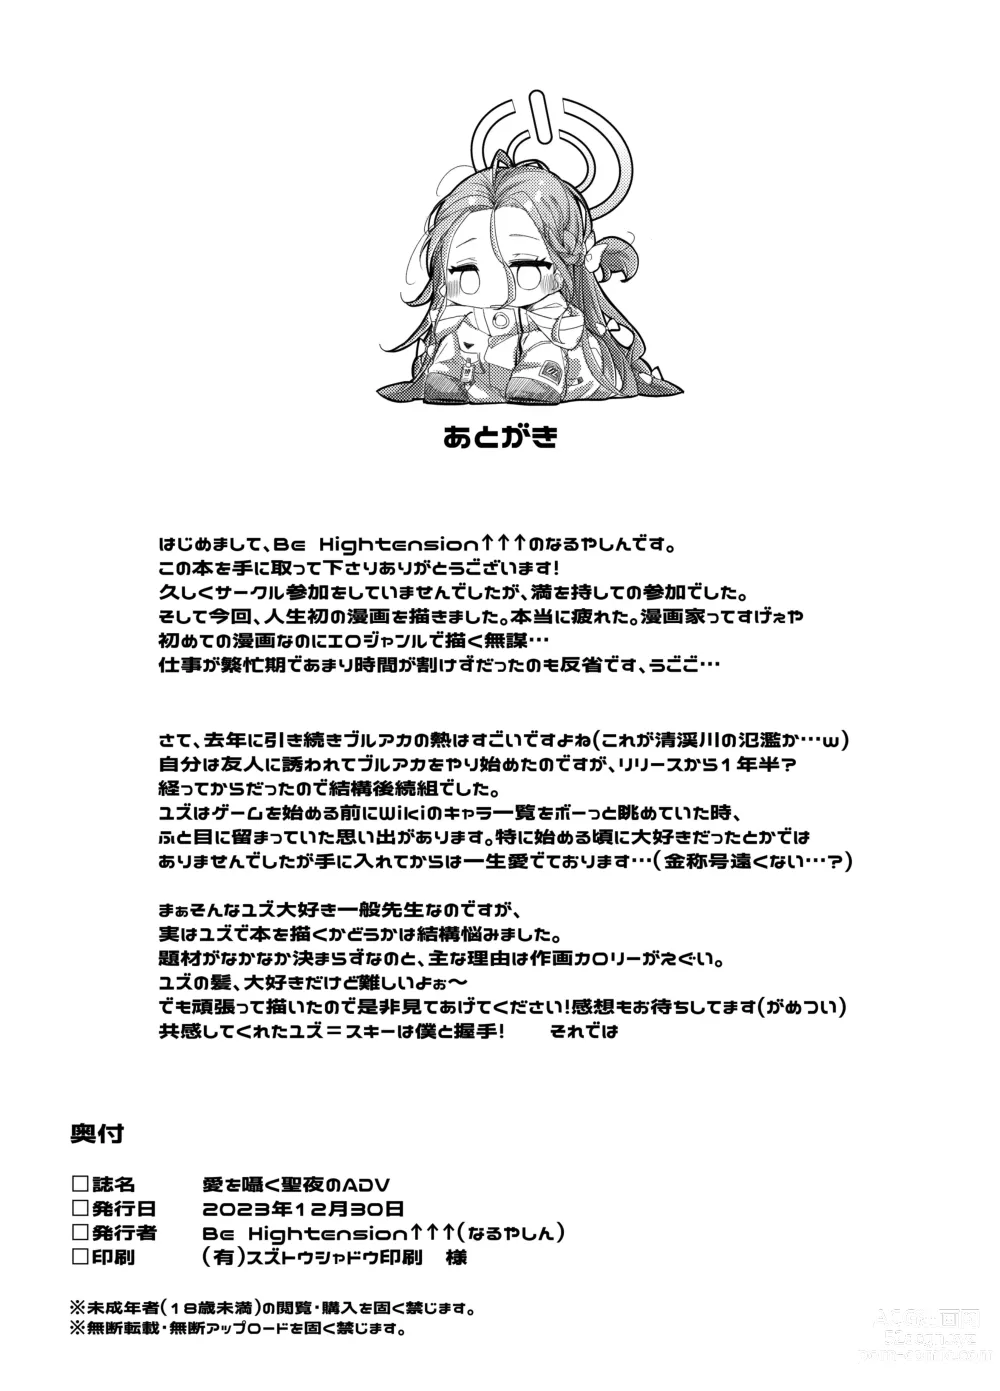 Page 23 of doujinshi Ai o Sasayaku Seiya no ADV - ADV that whispers love on the holy night